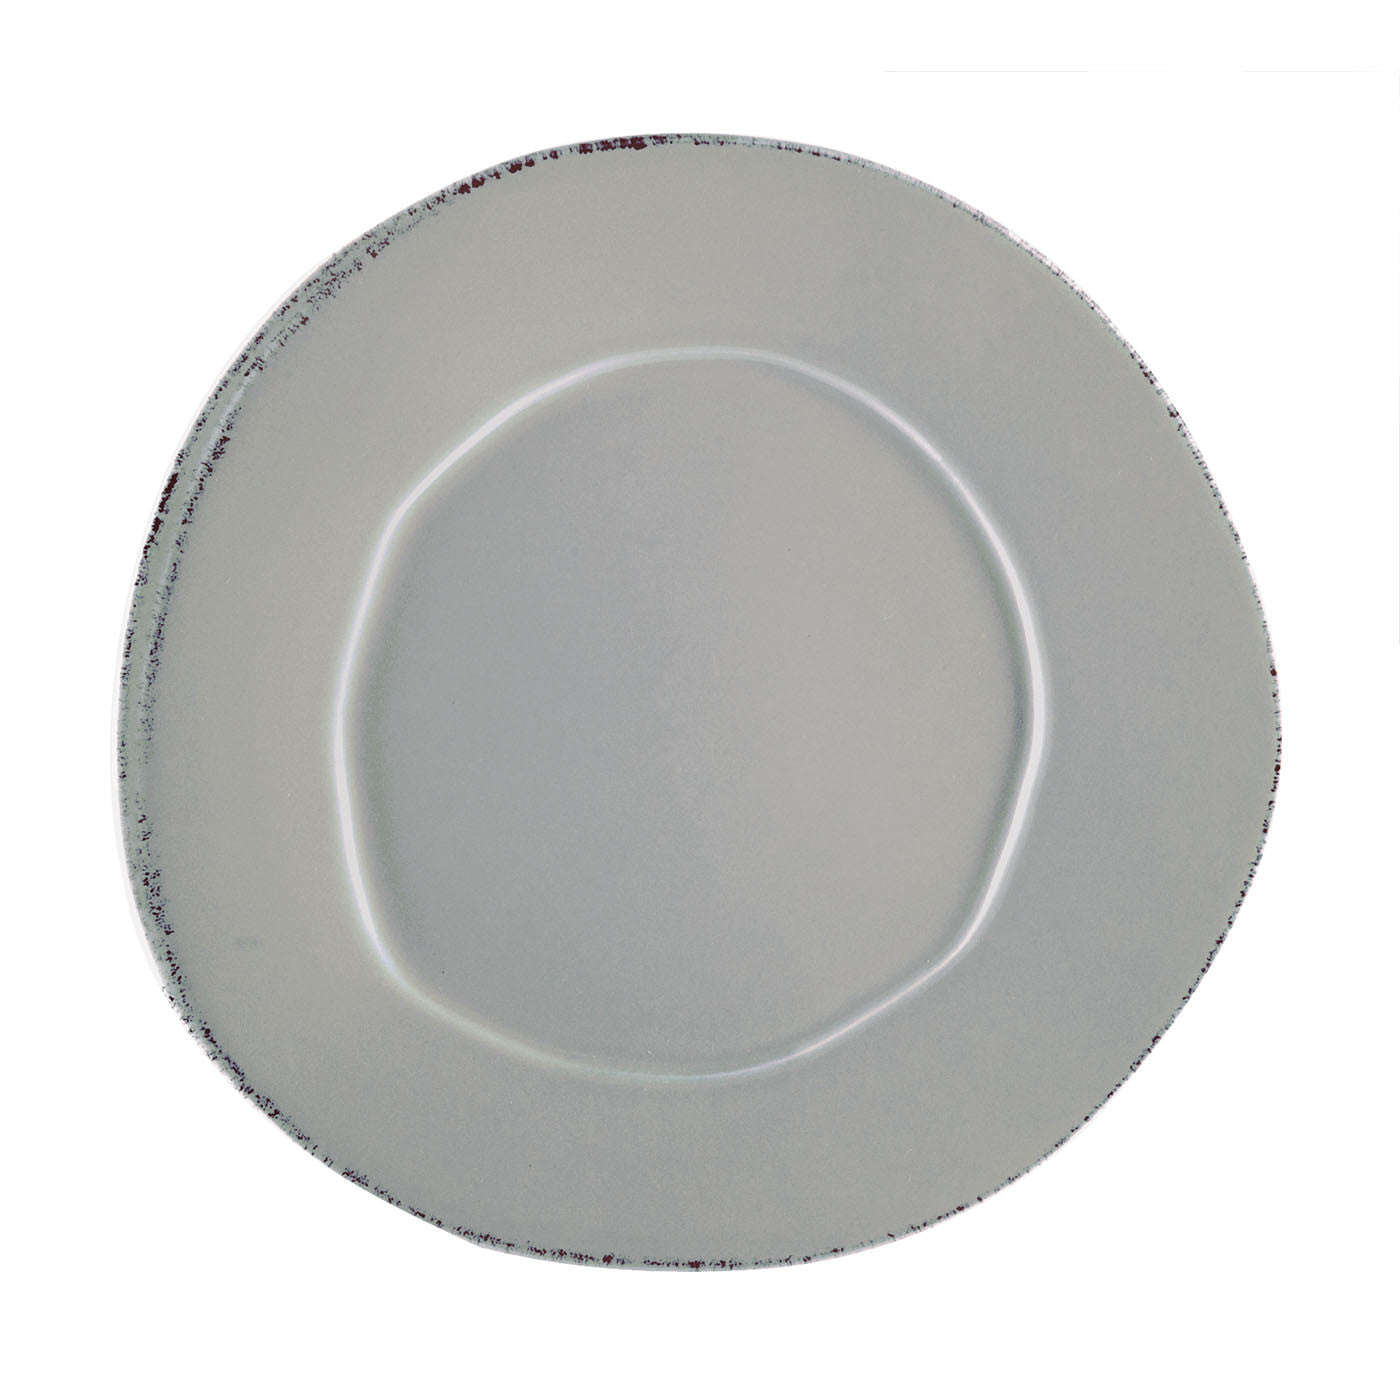 VIETRI: Lastra Gray European Dinner Plate - Artistica.com